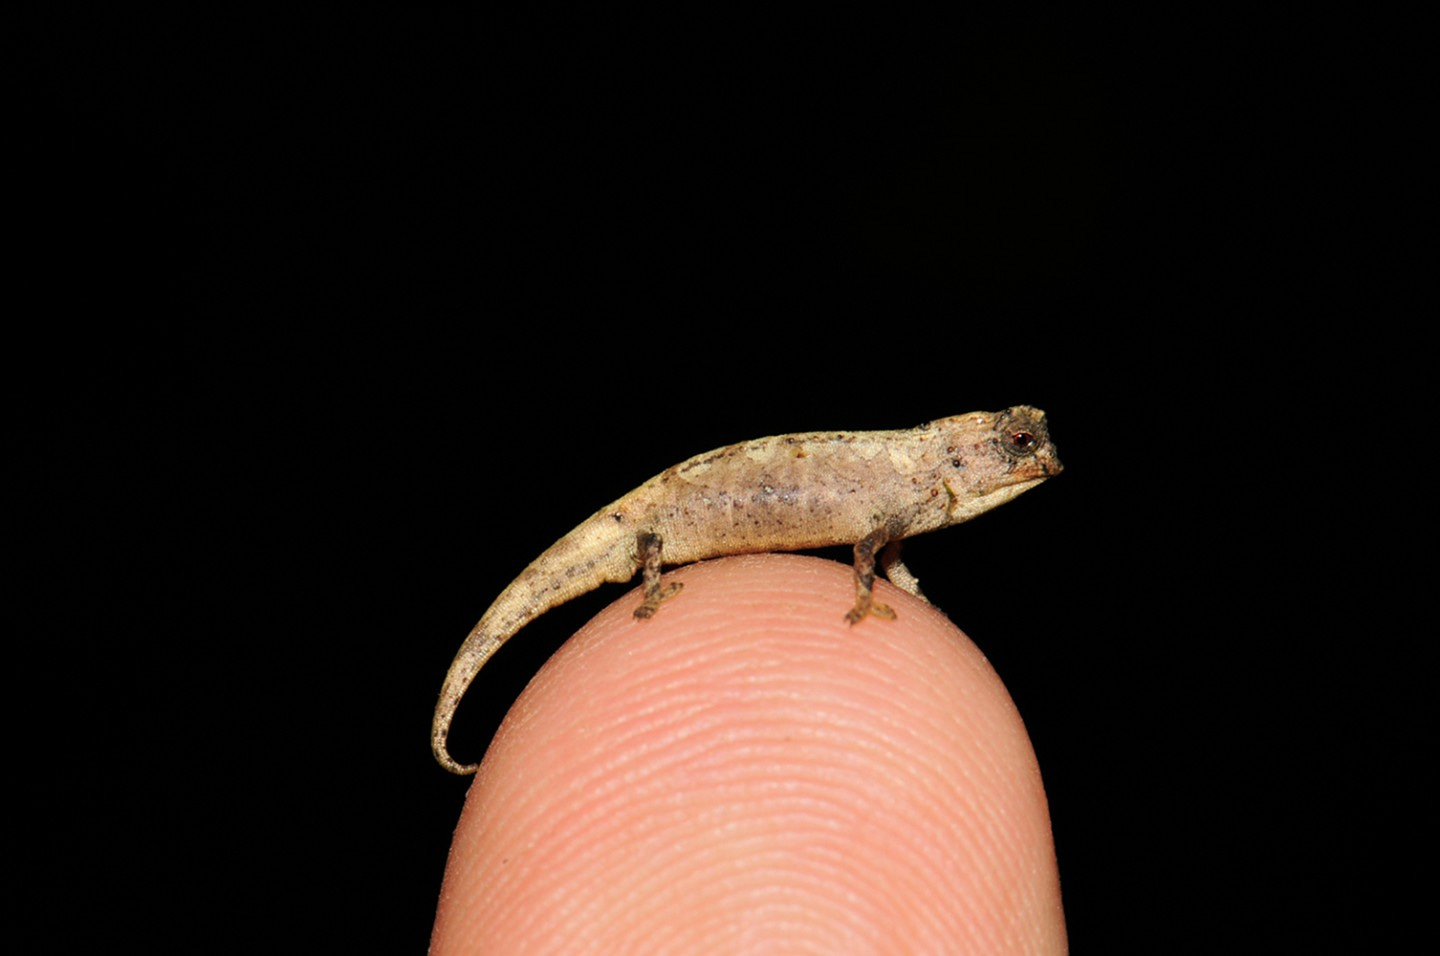 The male Nano-Chameleon (Brookesia nana) measures just 13.5 mm (0.5 in) long